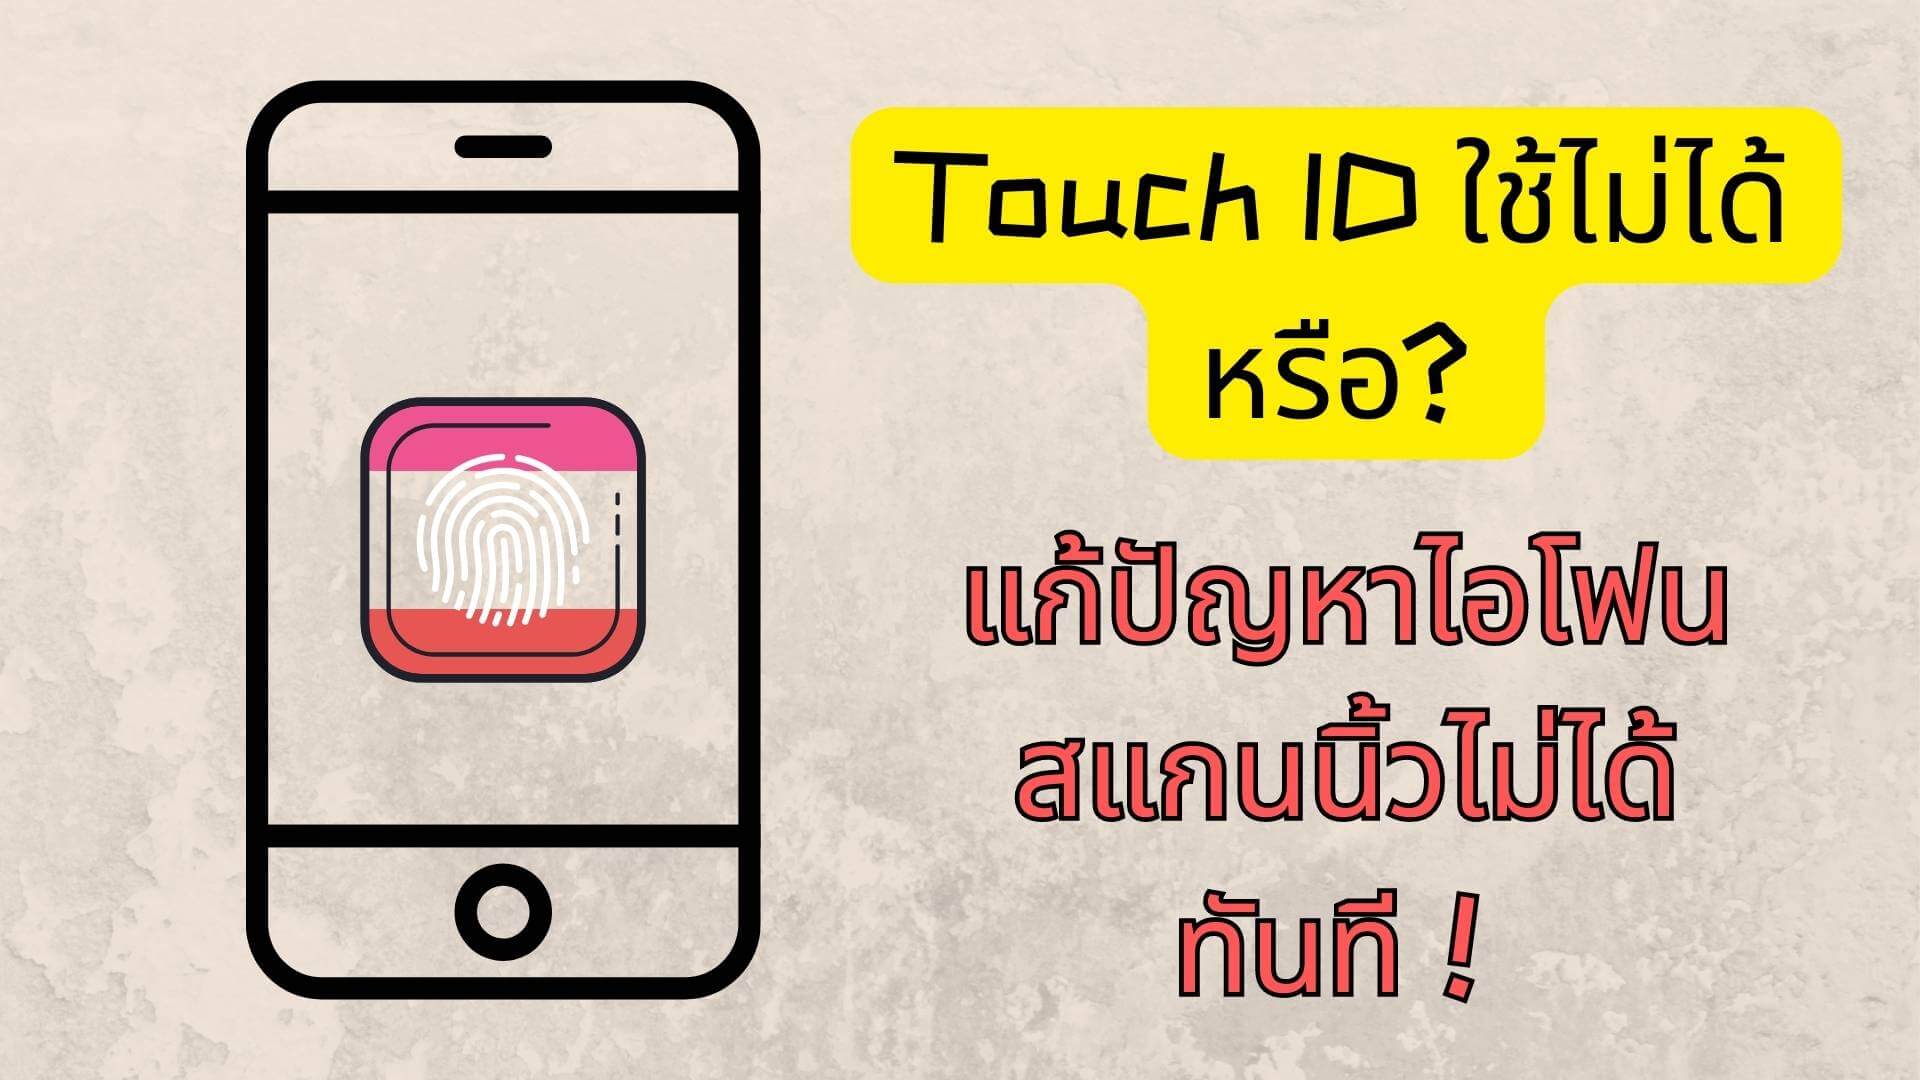 Touch ID ใช้ไม่ได้หรือ? แก้ปัญหาไอโฟนสแกนนิ้วไม่ได้ทันที！